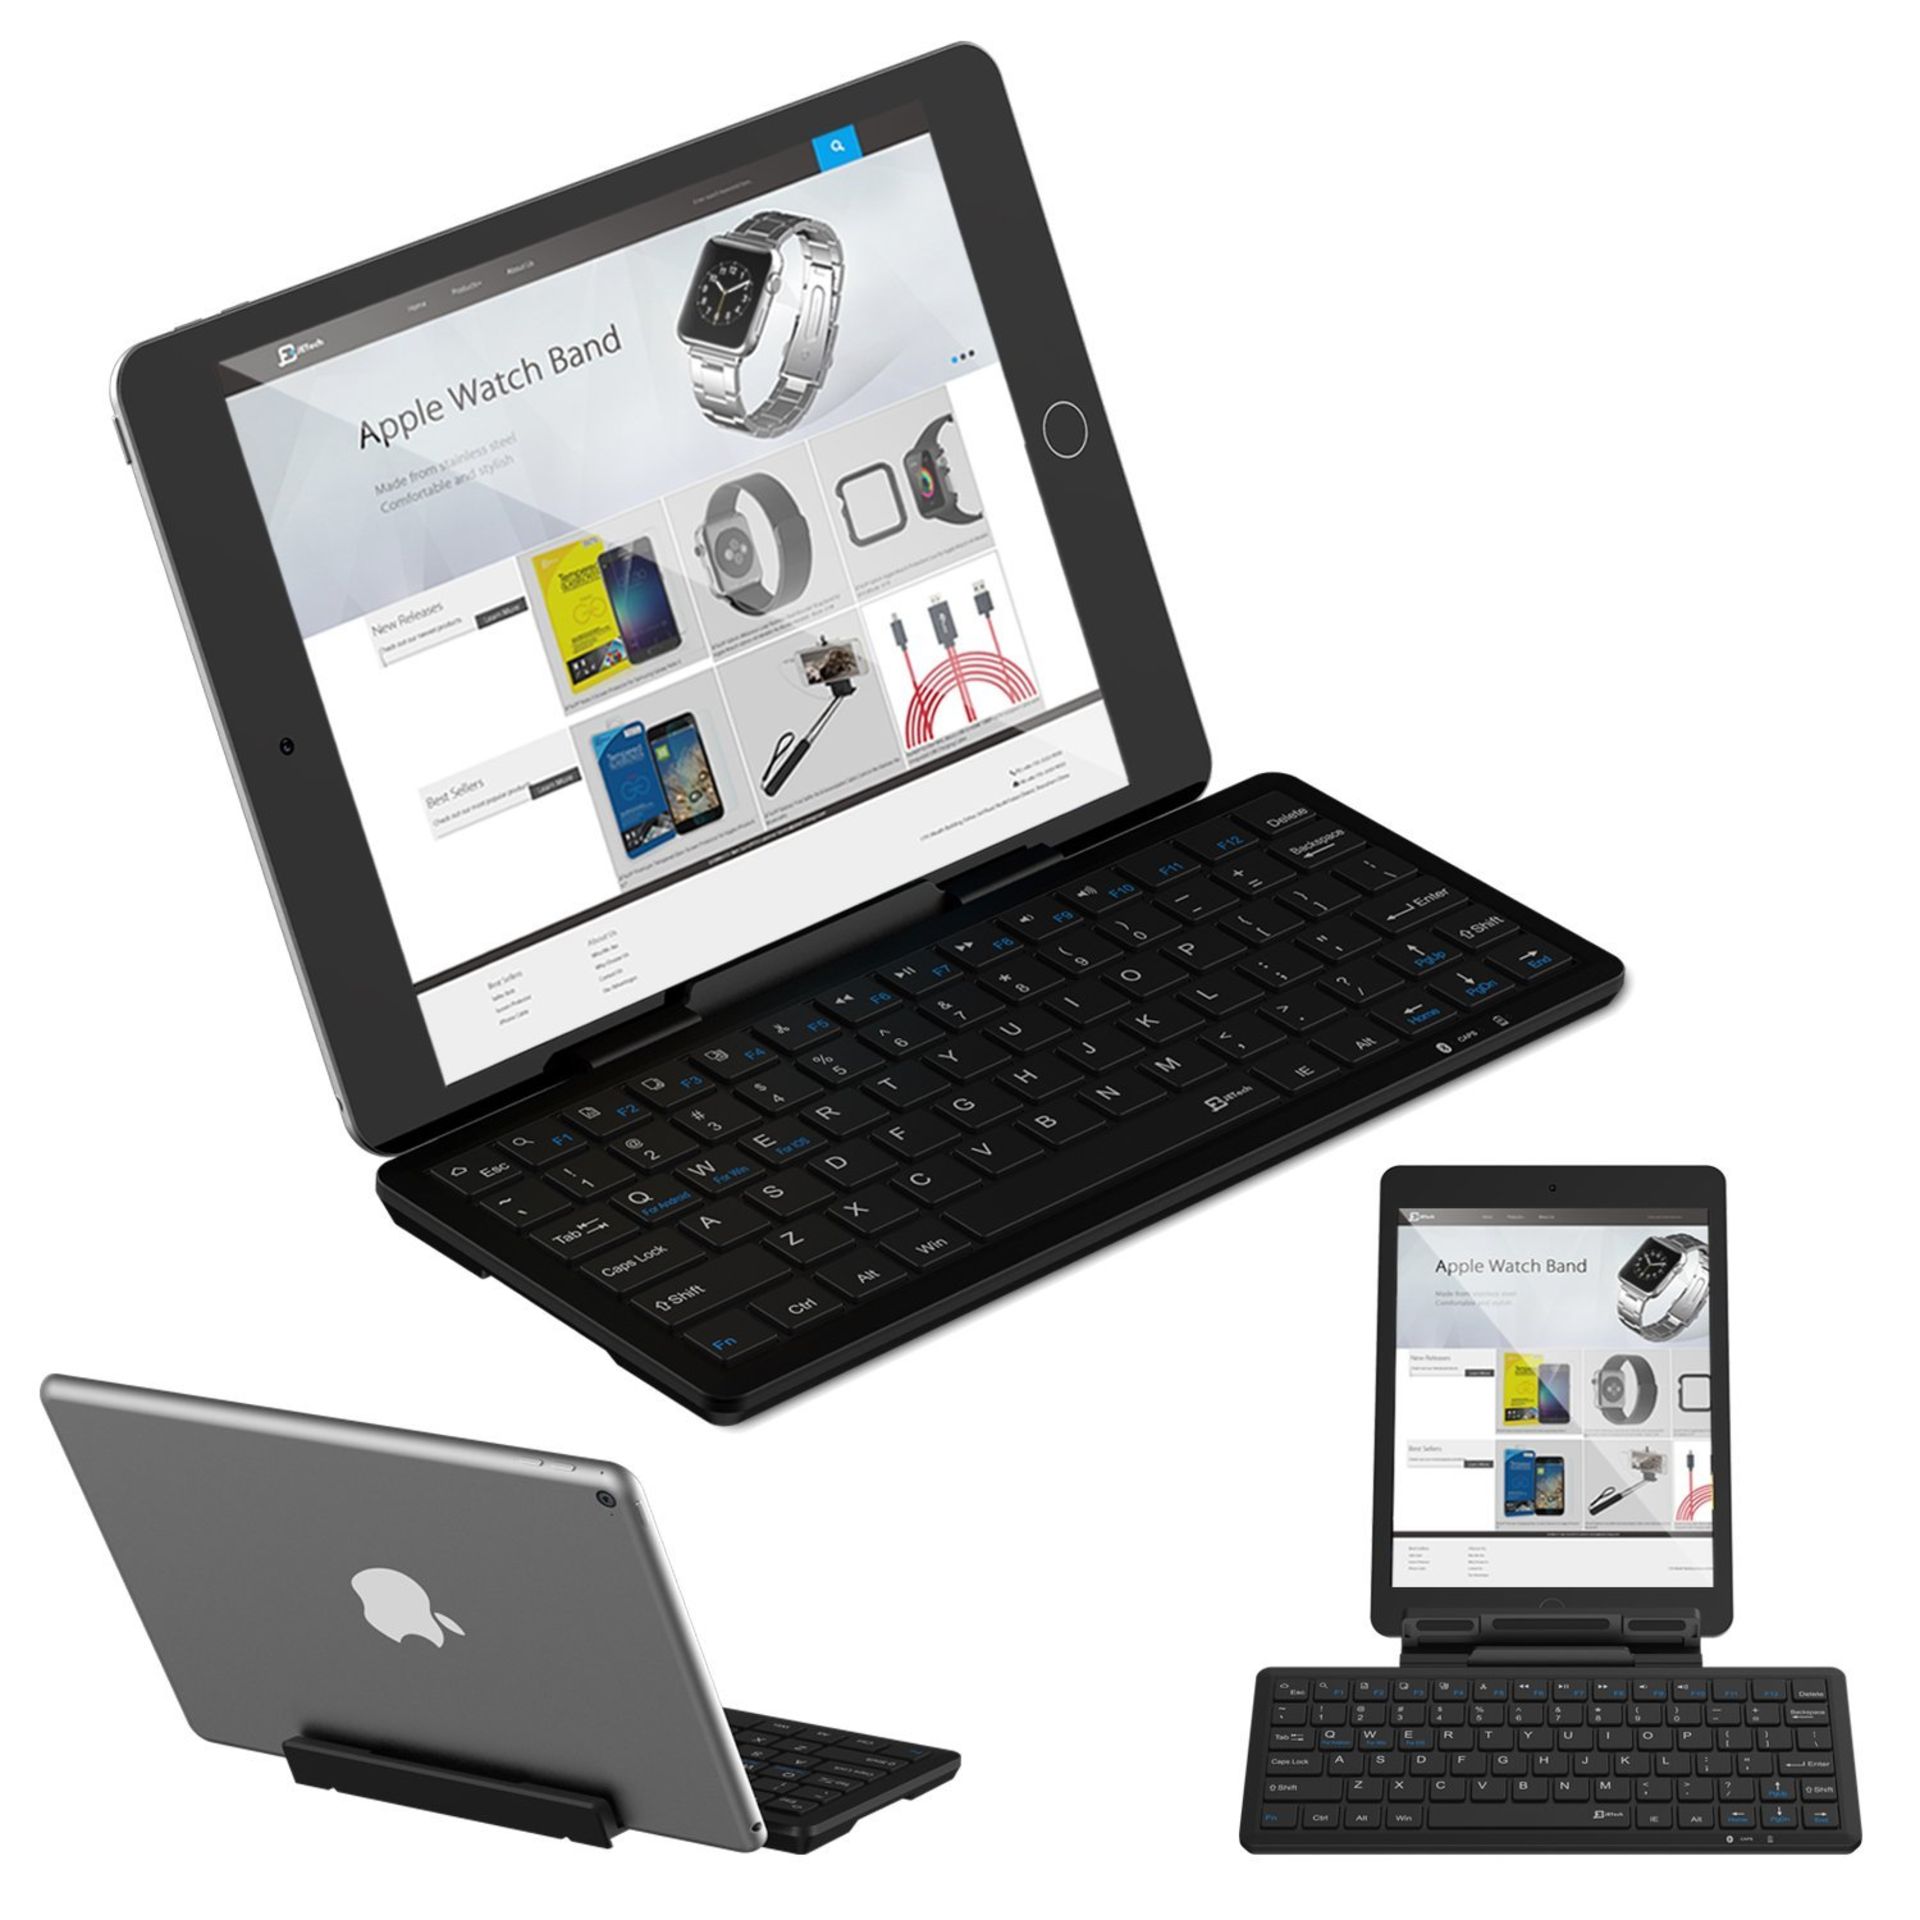 V Brand New Tragbare Universal Bluetooth Keyboard Amazon Price £14.95